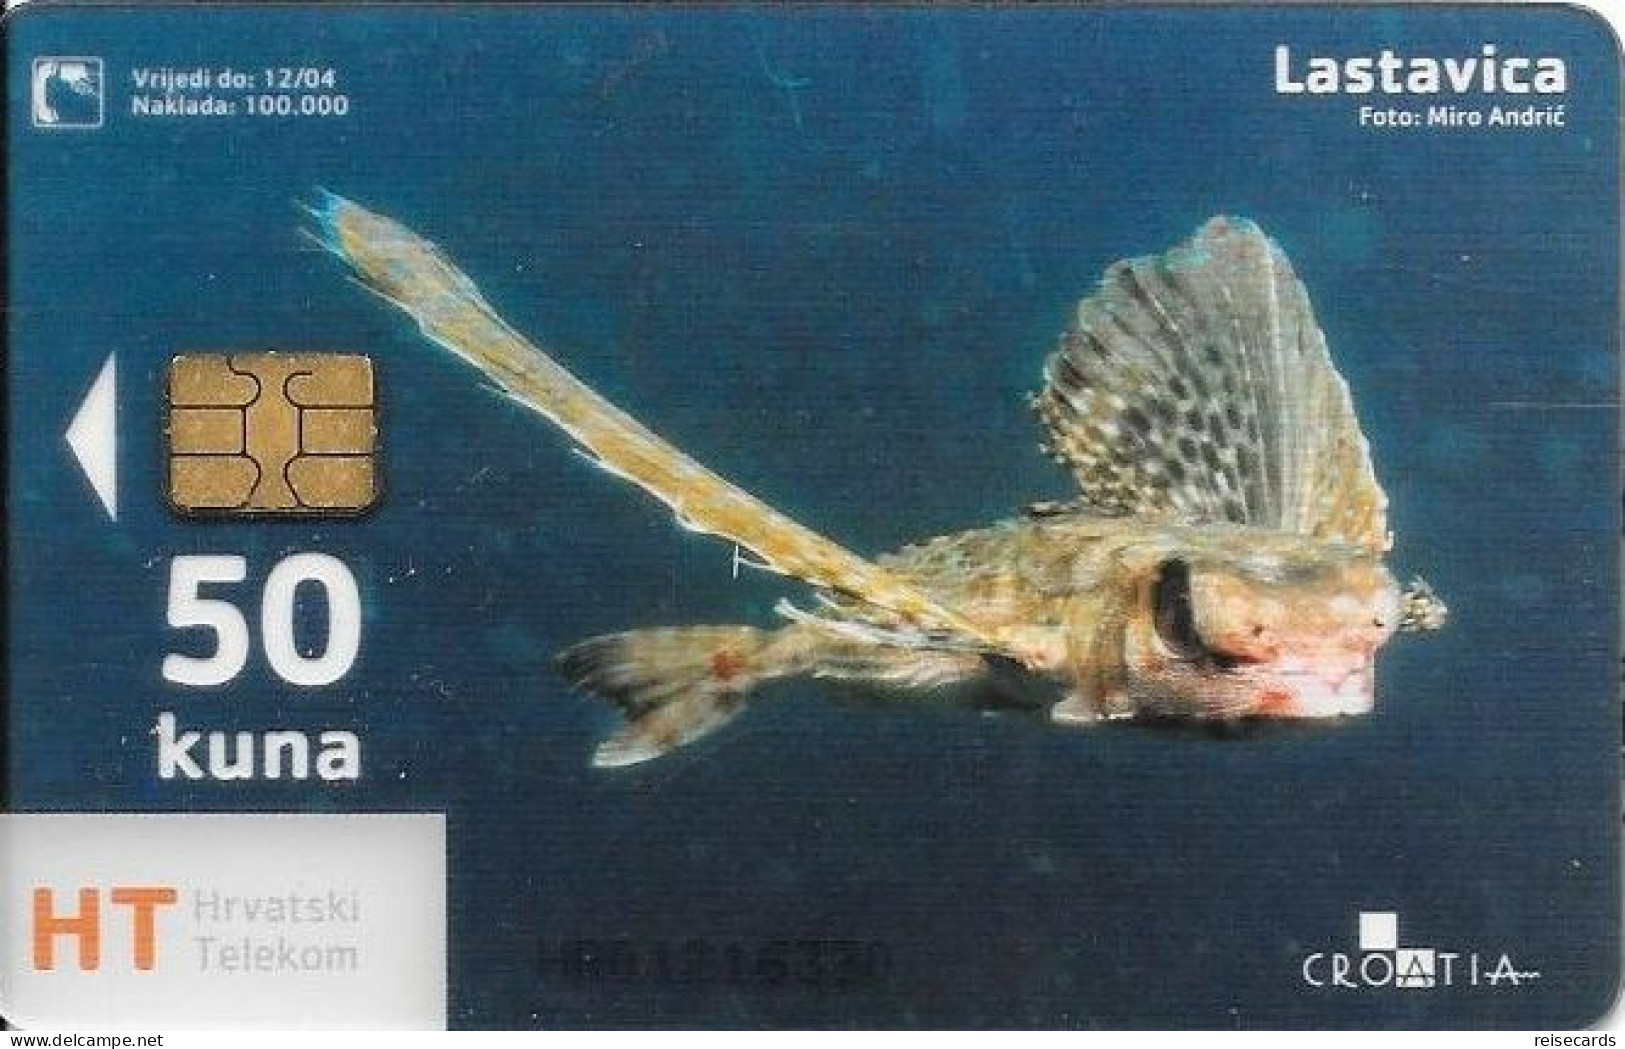 Croatia: Hrvatski Telekom - Underwater World, Lastavica. Transparent - Croatia